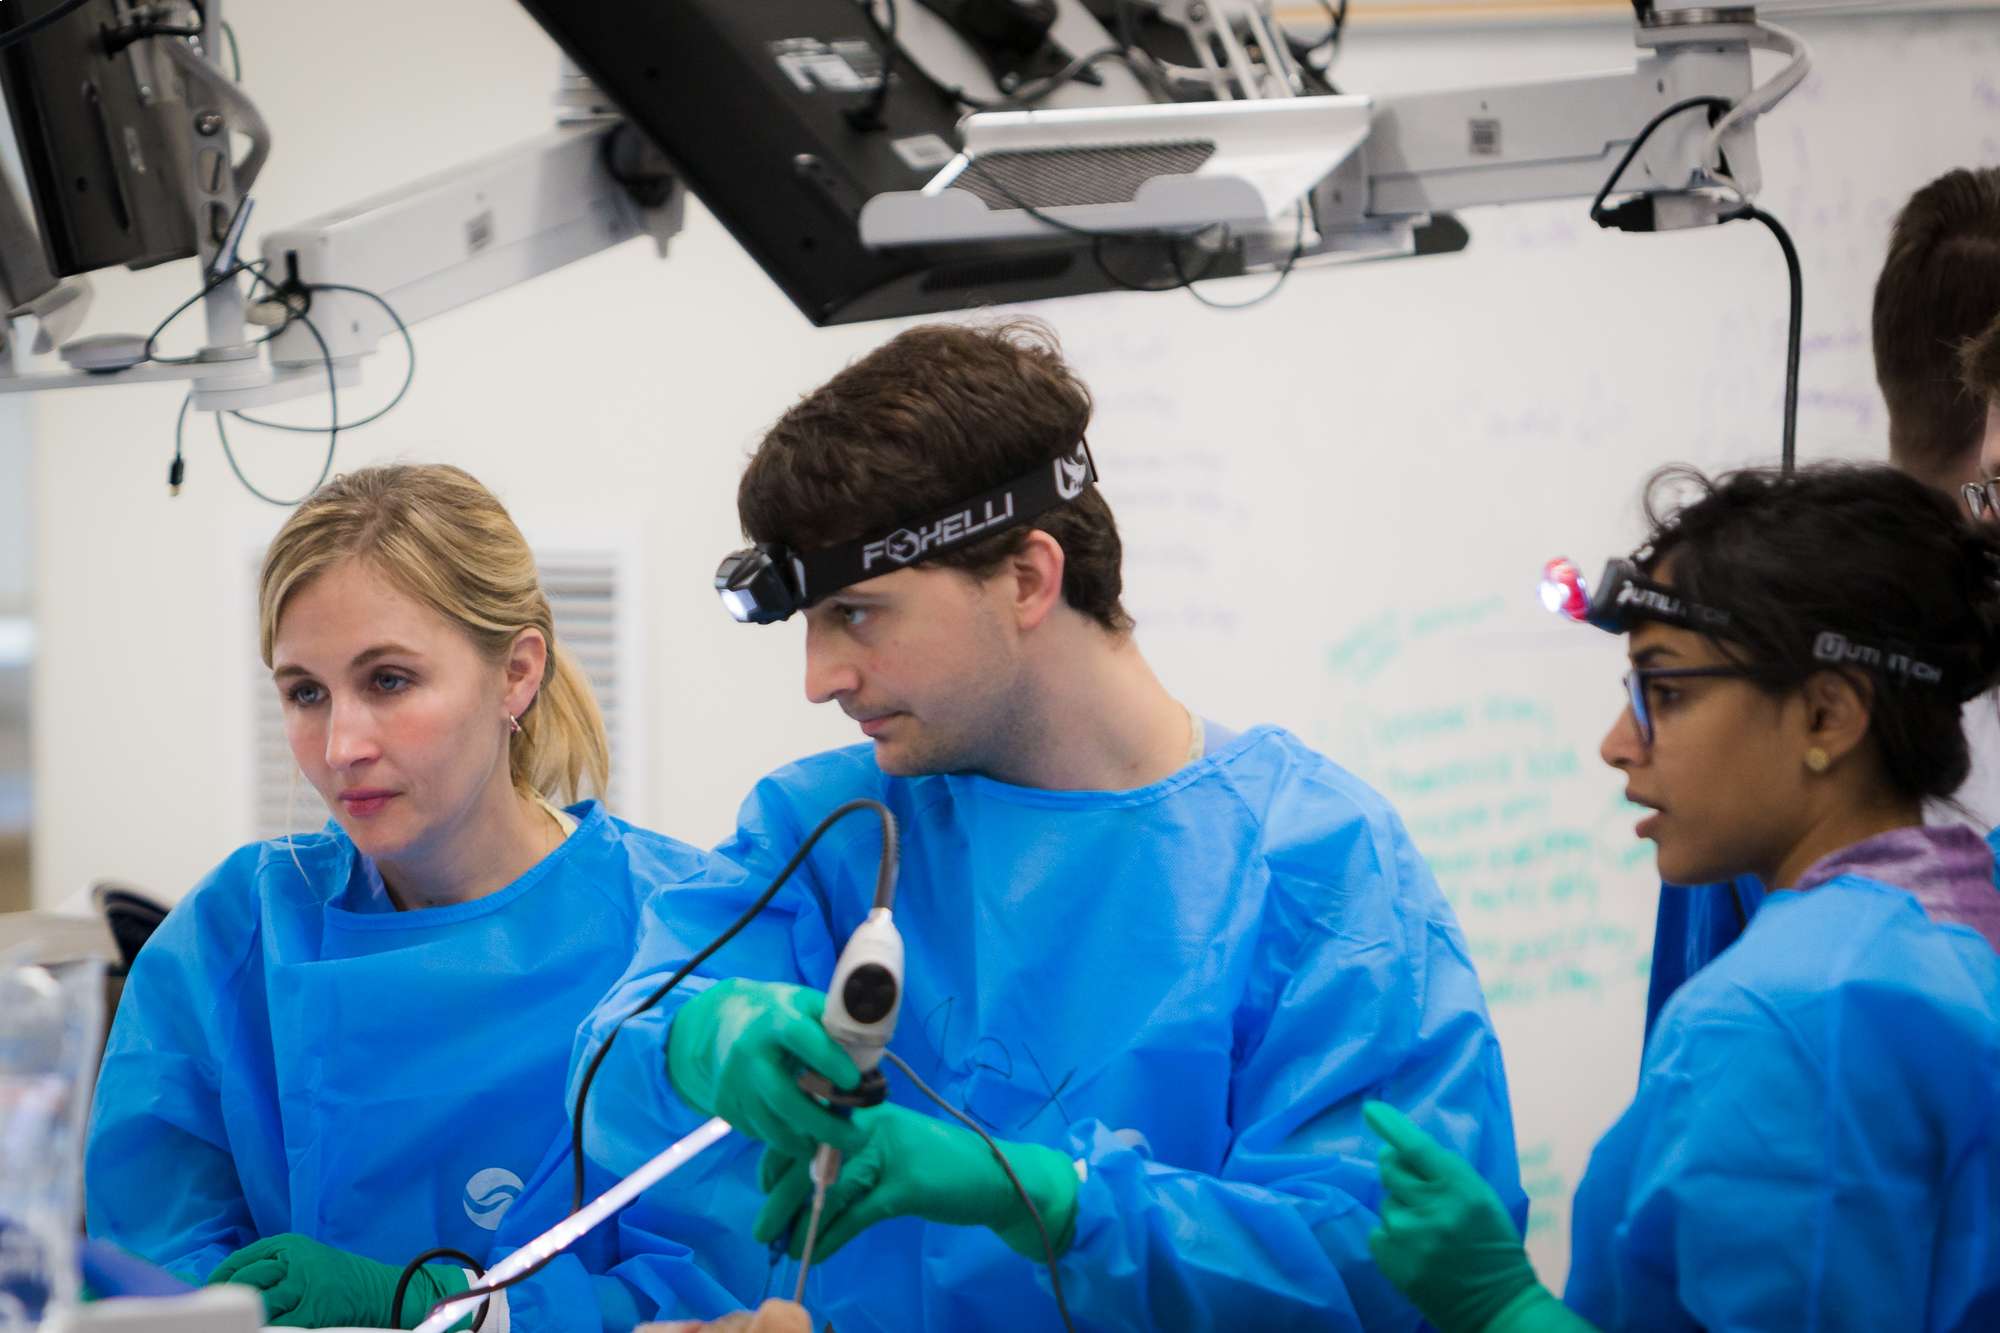 Students refine surgical skills